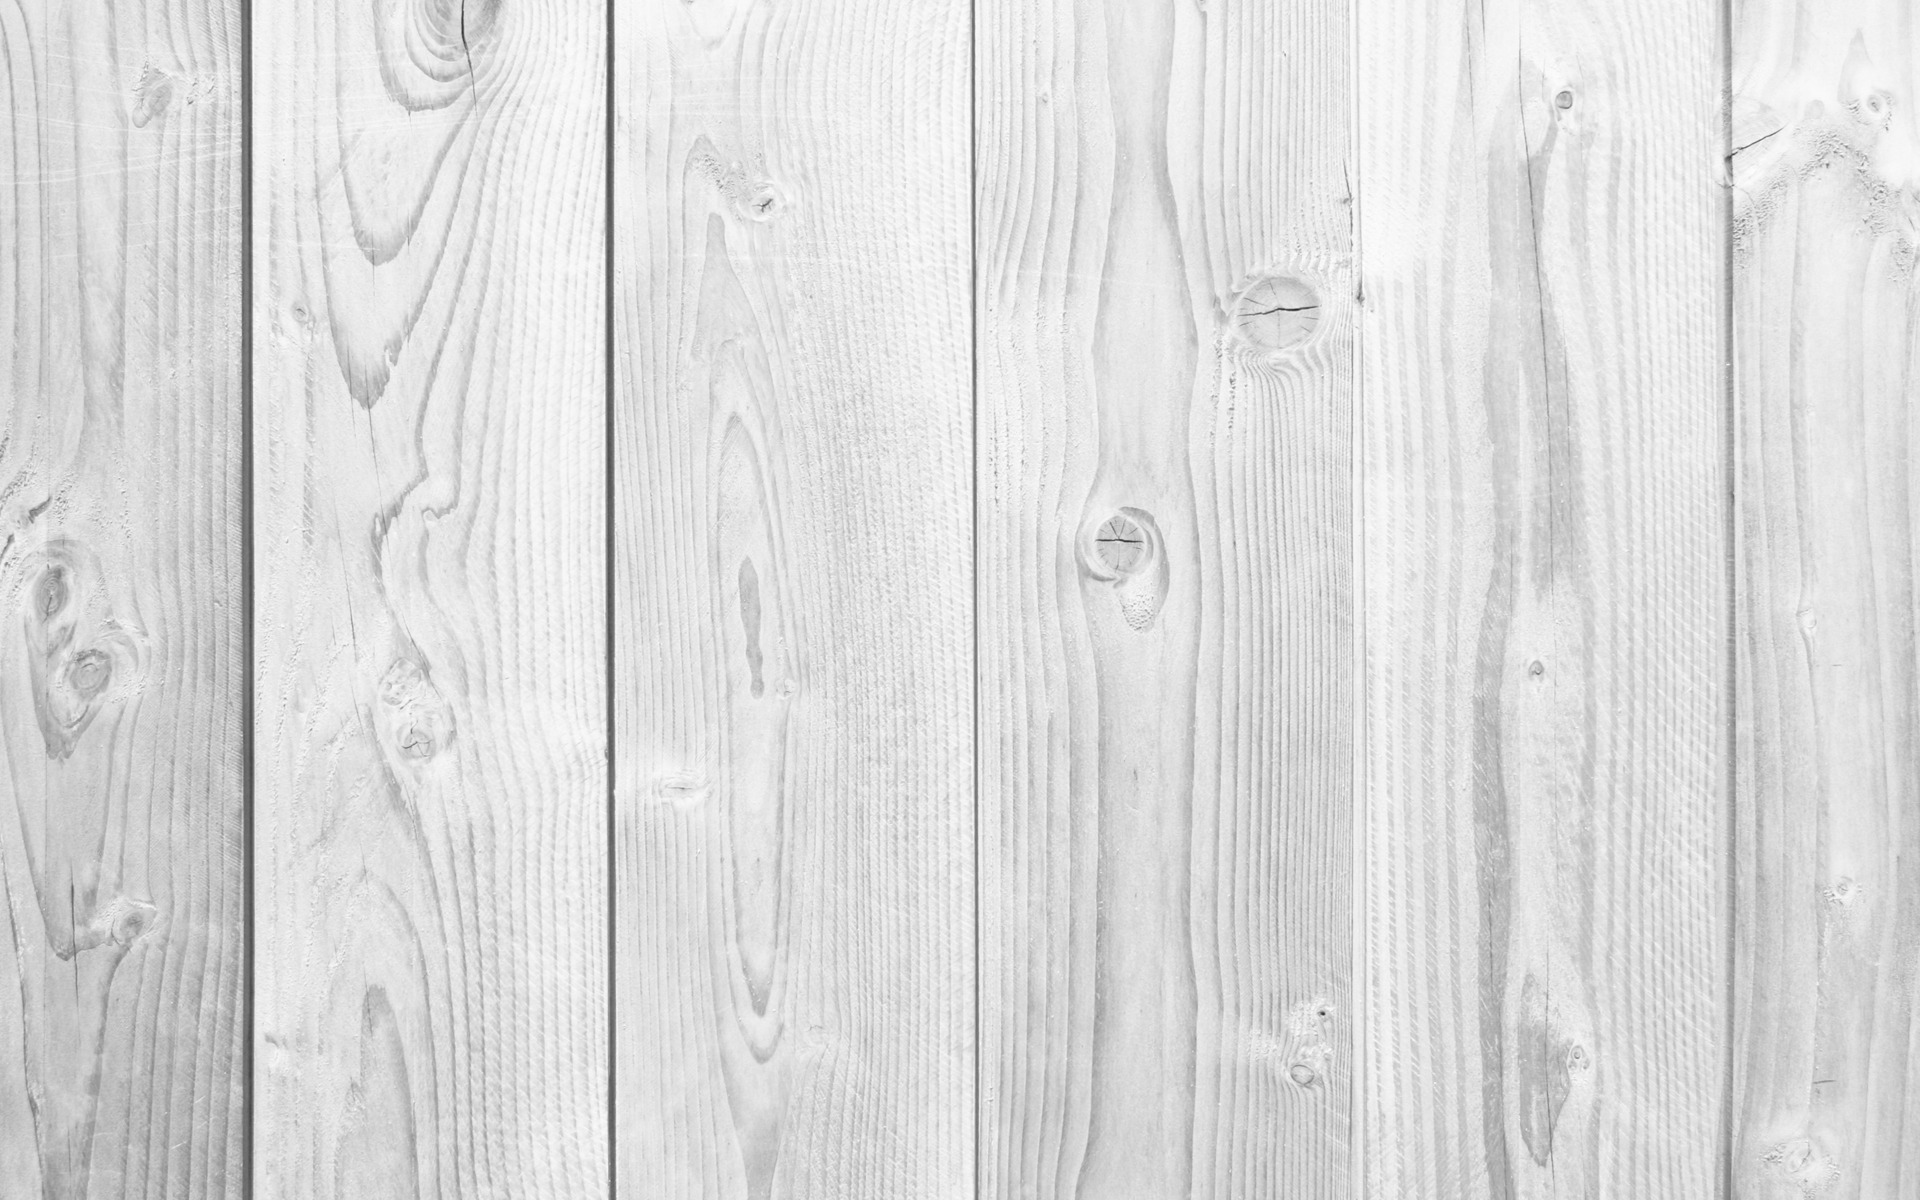  comwp contentuploads201308white wood wall texture wallpaperjpg 1920x1200